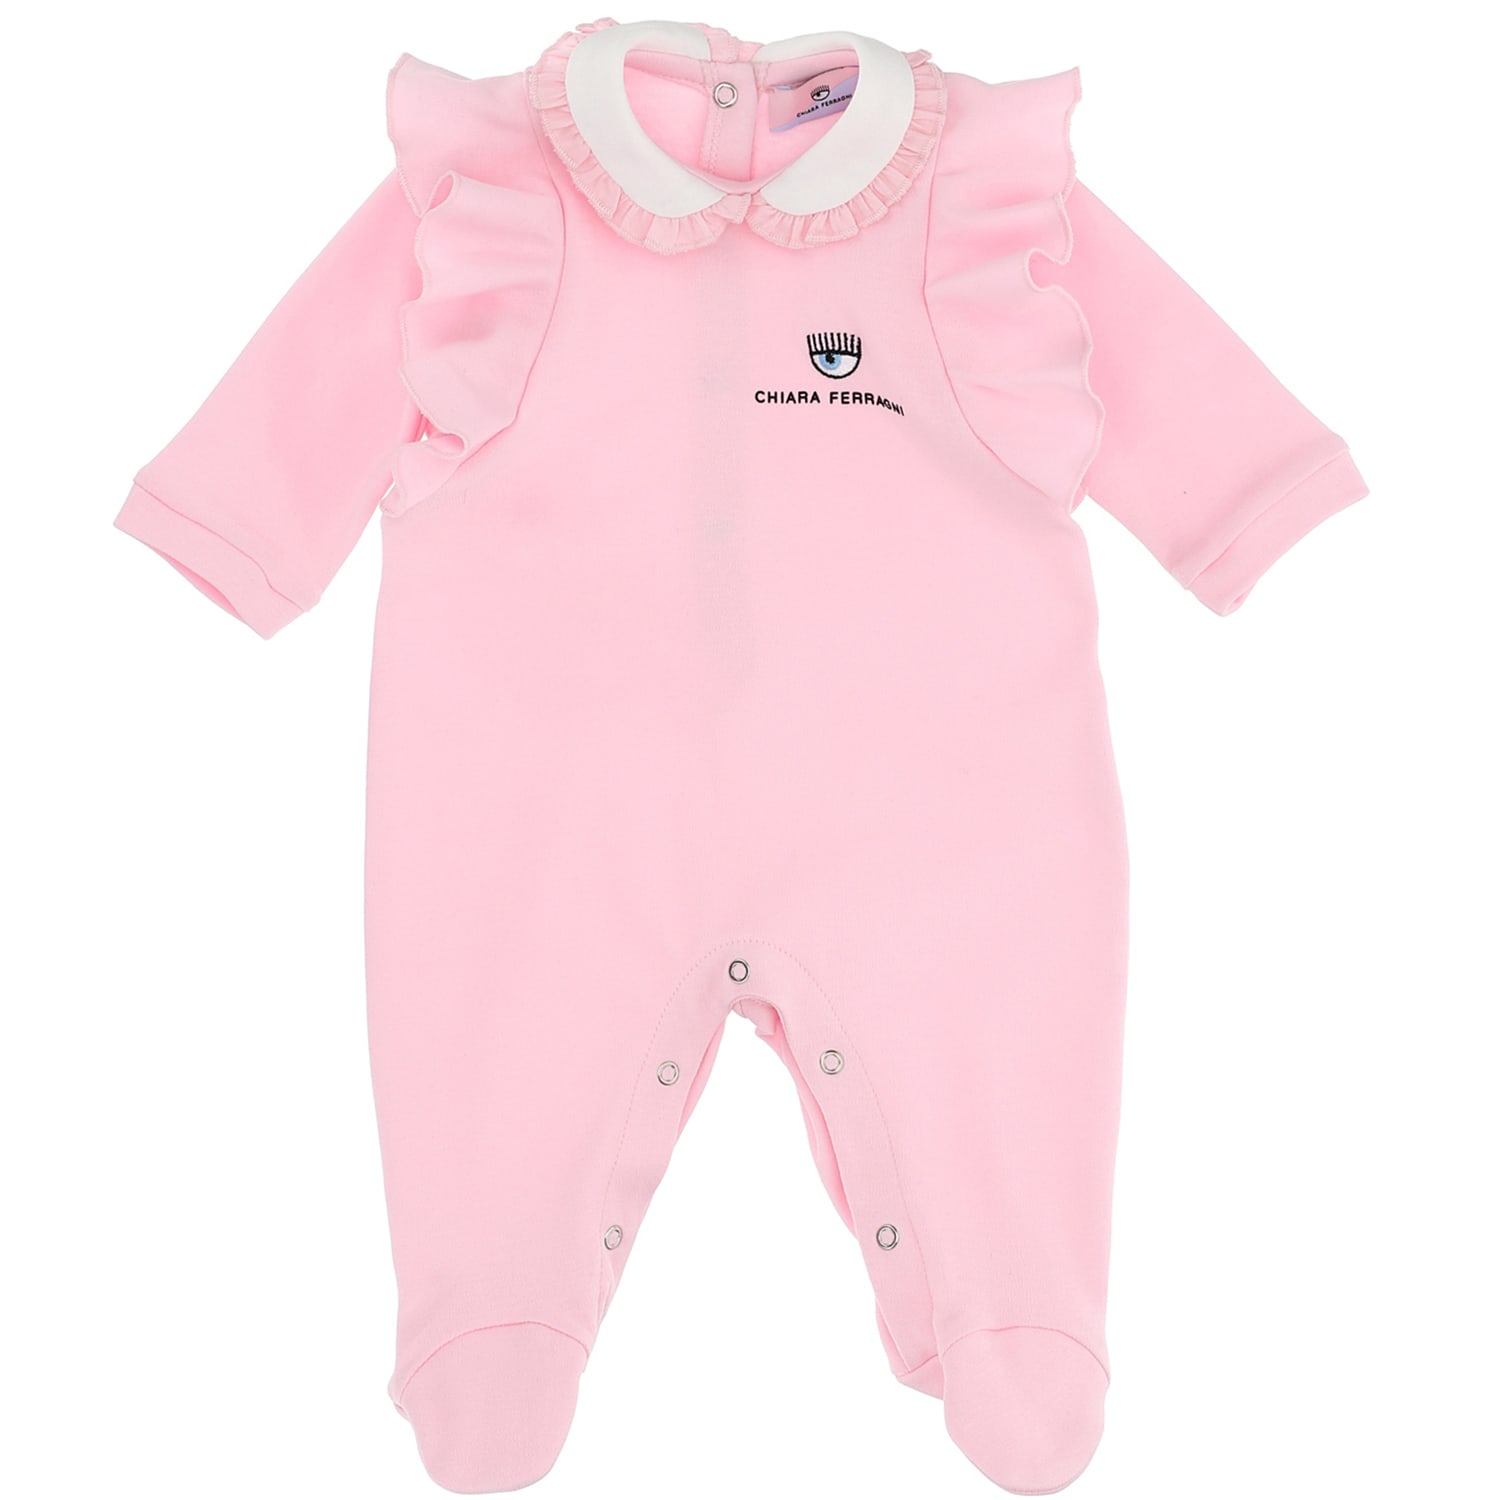 Chiara Ferragni Pink Jumpsuit For Baby Girl